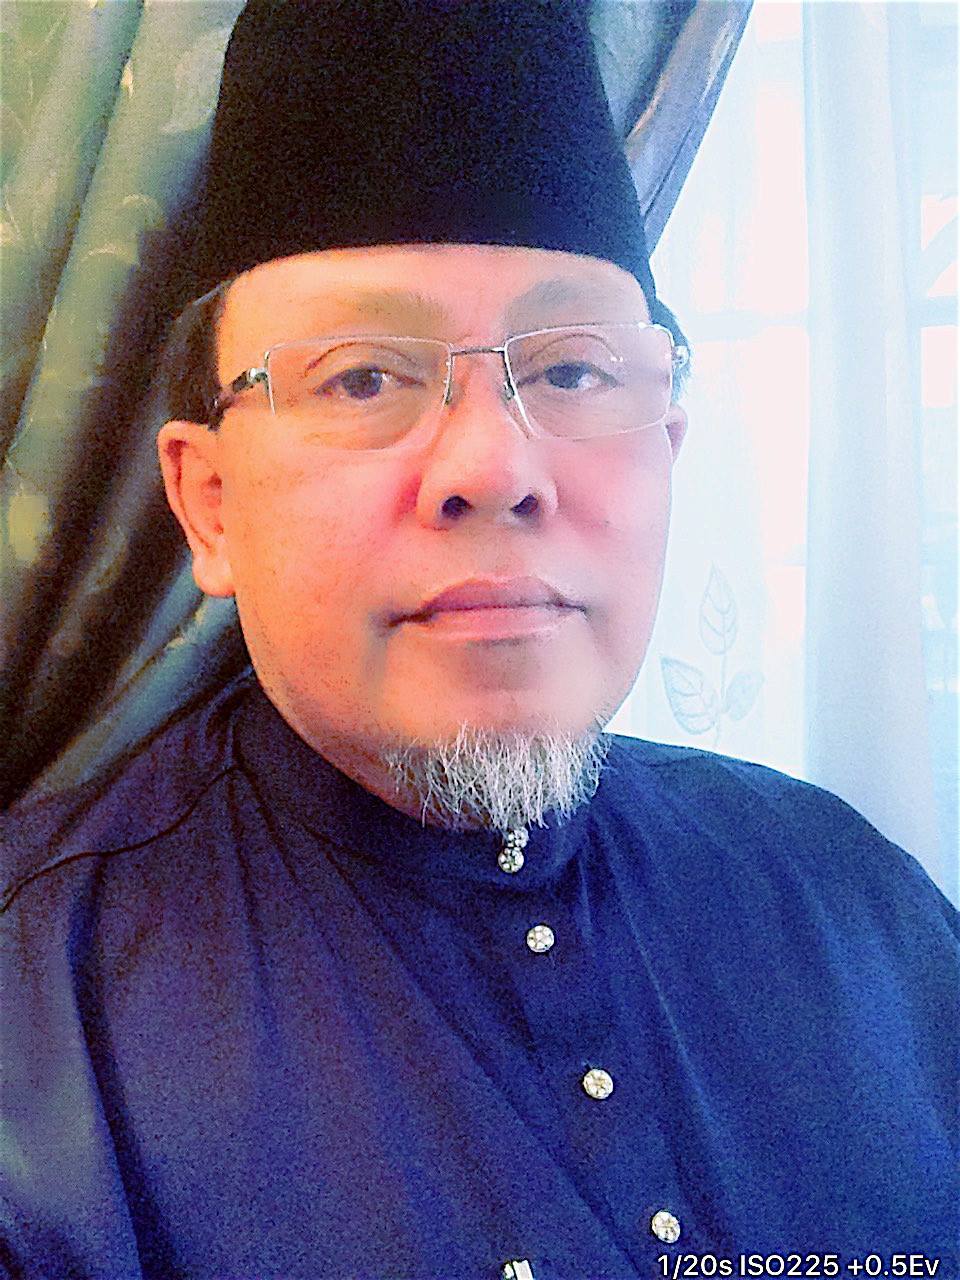 Che Nazran Haji Abdullah in baju melayu and songkok. He wears rimless glasses and has a white goatee.